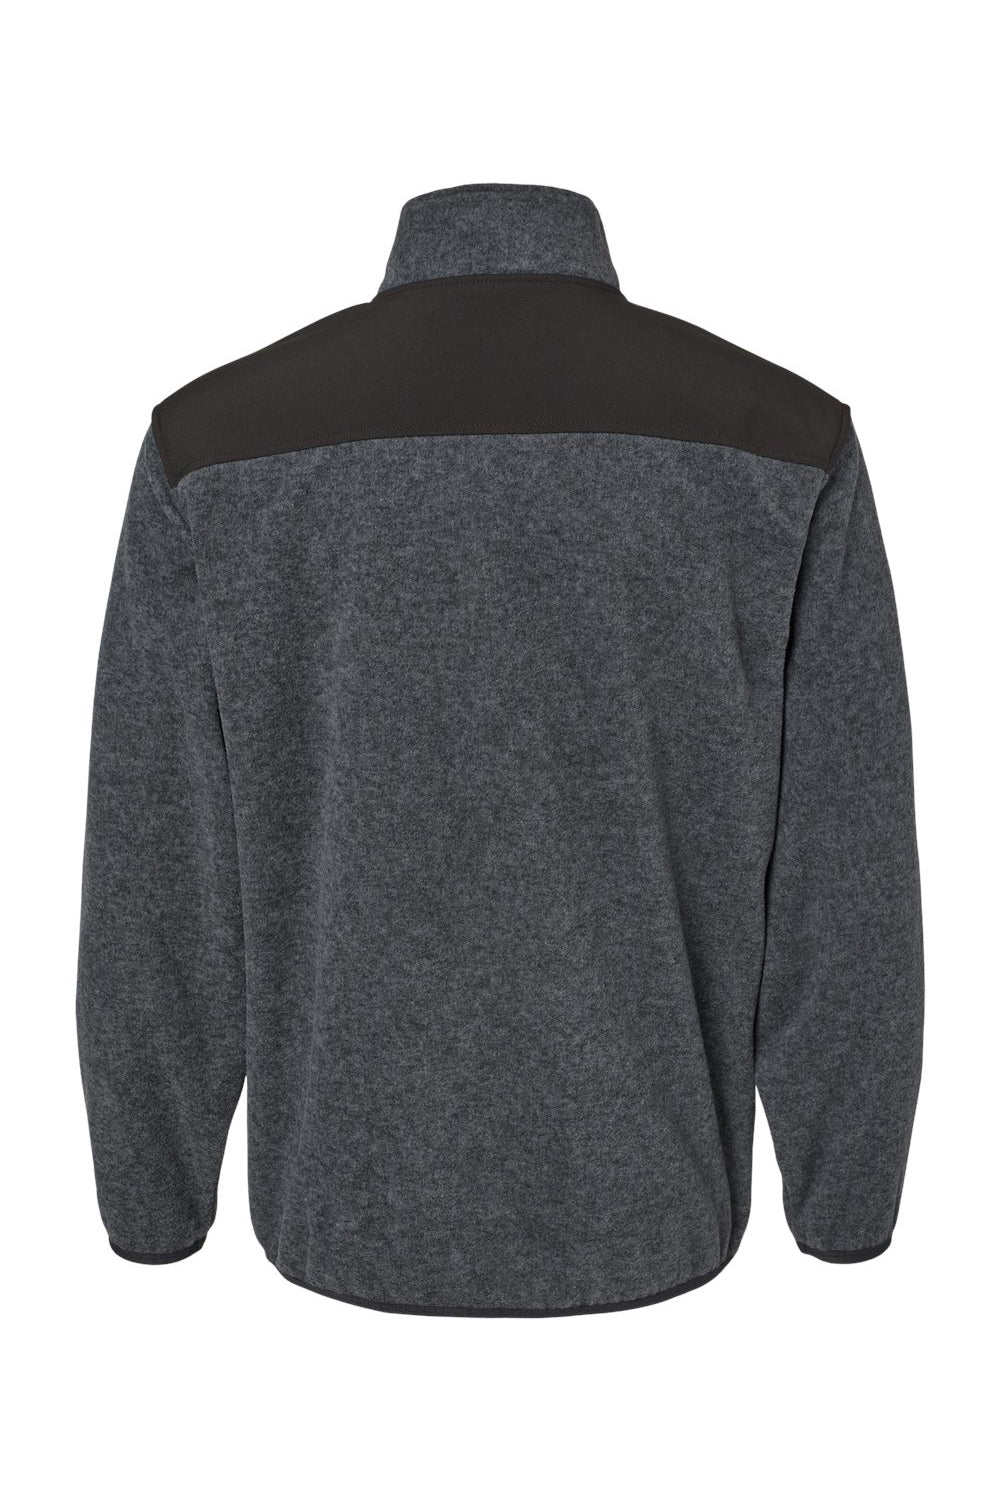 Dri Duck 7353 Mens Ranger Melange Fleece Sweatshirt Charcoal Grey Flat Back